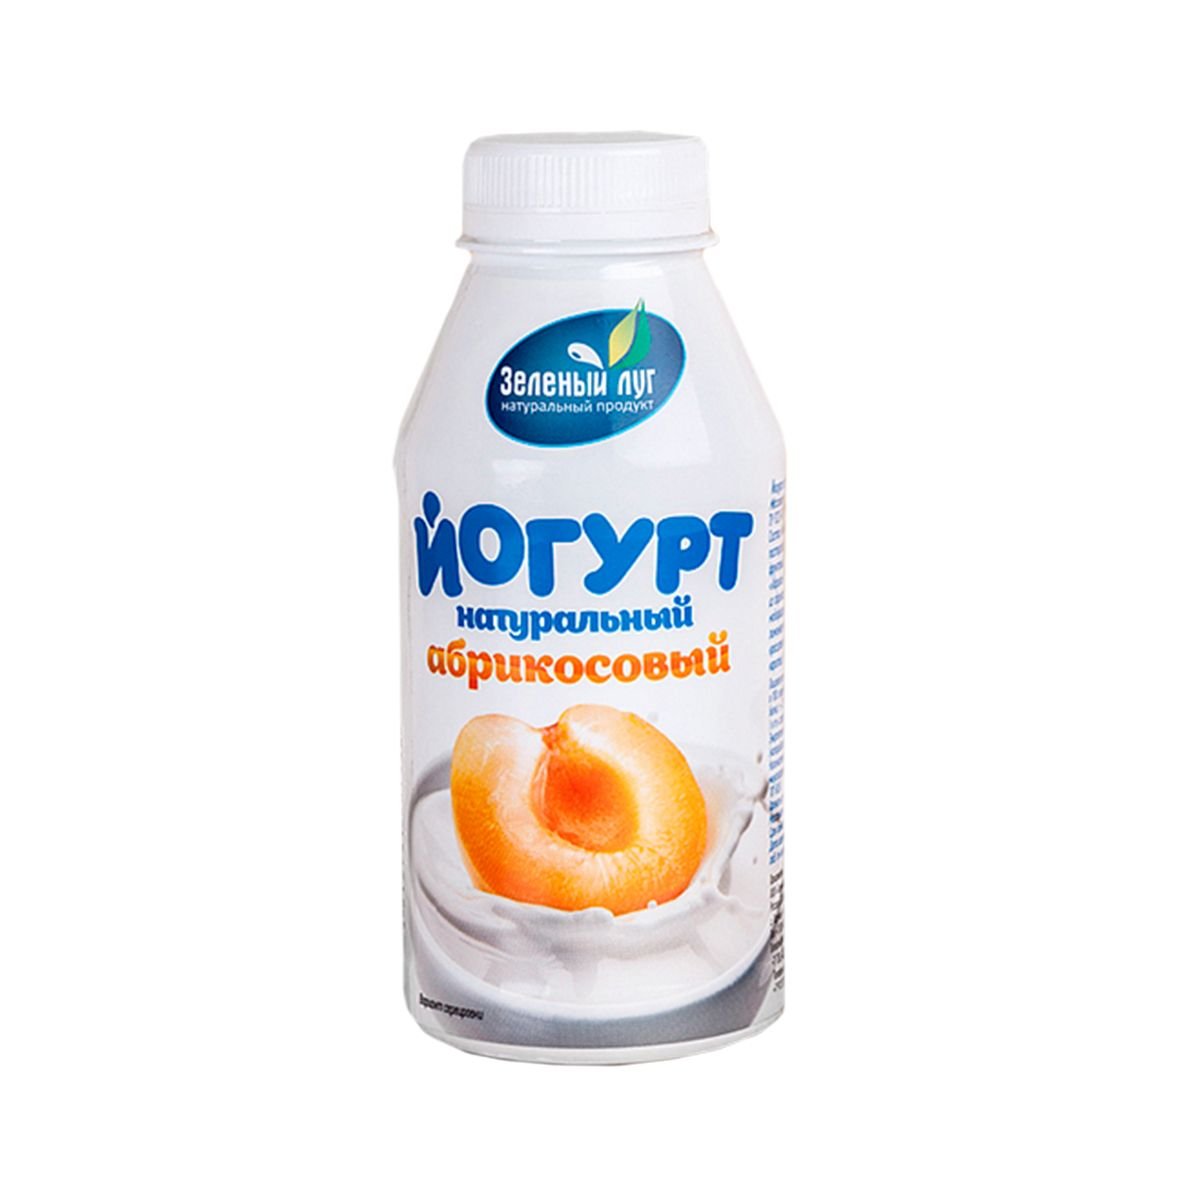 Йогурт Зеленый луг натуральный Абрикосовый 2.5% пл/бут 340г